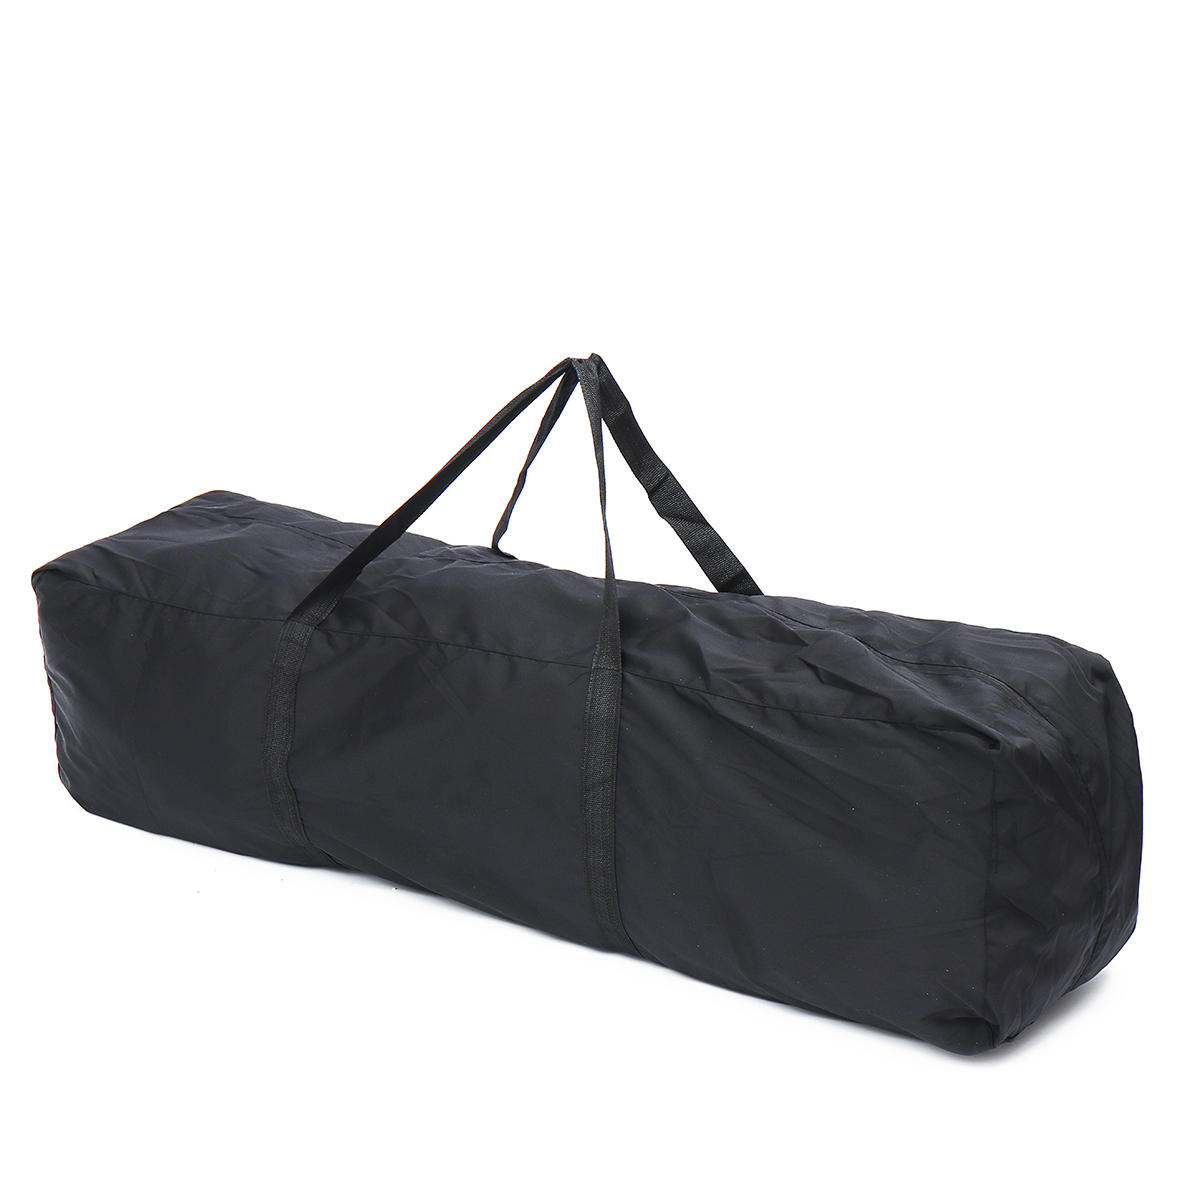 11L al aire libre Travel Holiday Caso Bolsa Impermeable Daypack, bolso de almacenamiento Bolsa para Maclaren Buggy cochecito